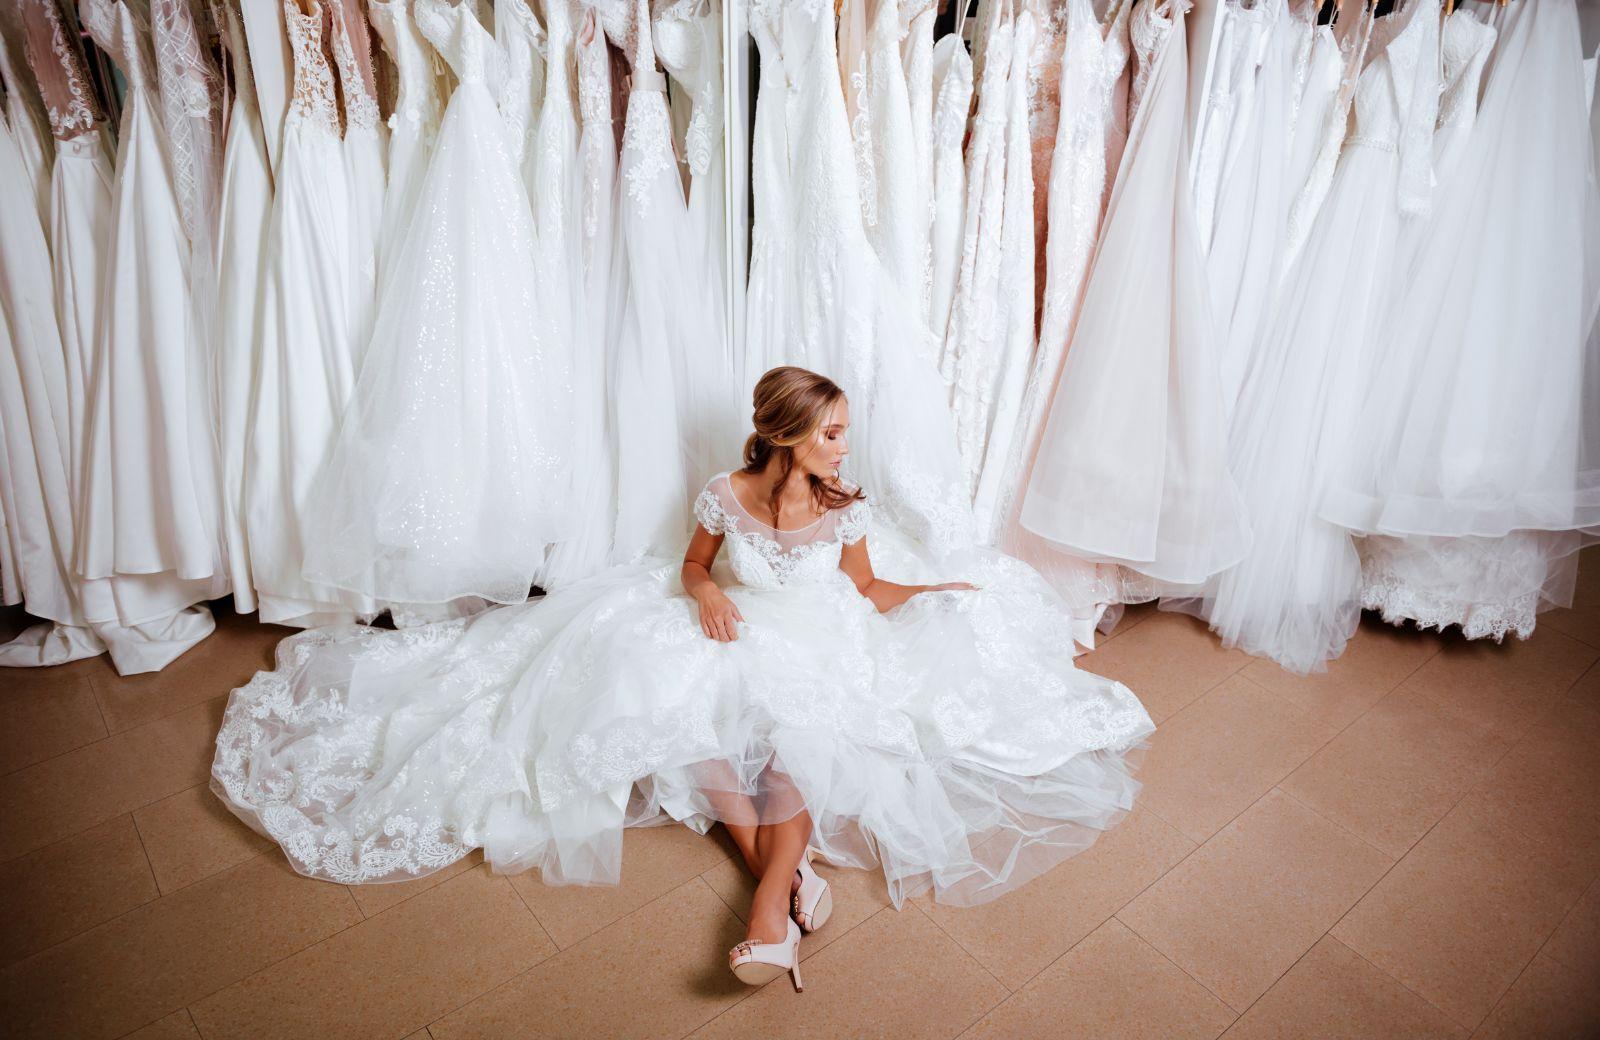 844487be-d1c6-4697-8366-f5aa82f0f580-Selecting the Perfect Wedding Dress for LA Venues.jpg